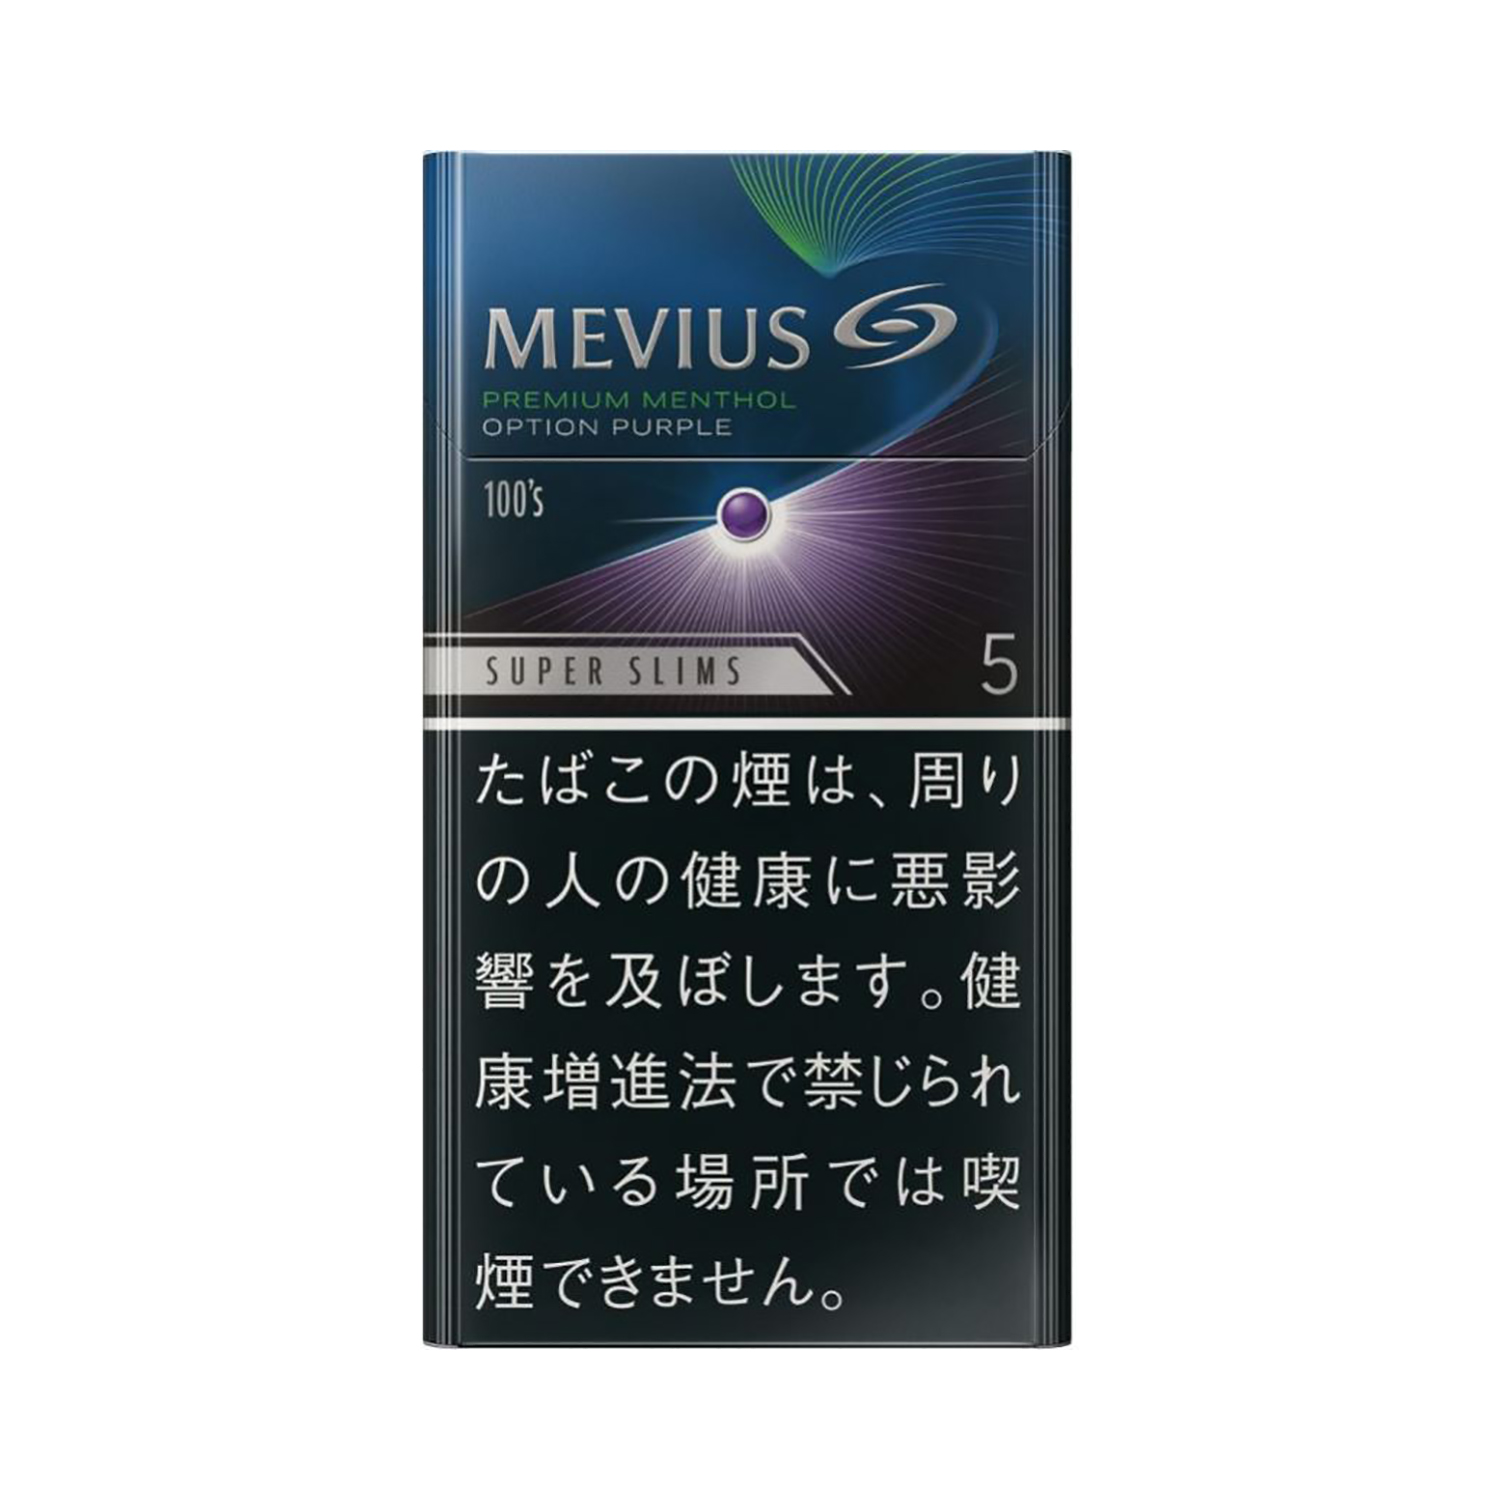 MEVIUS PREMIUM MENTHOL OPTION PURPLE 5 100's SLIM/ Tar:5mg Nicotine:0.5mg